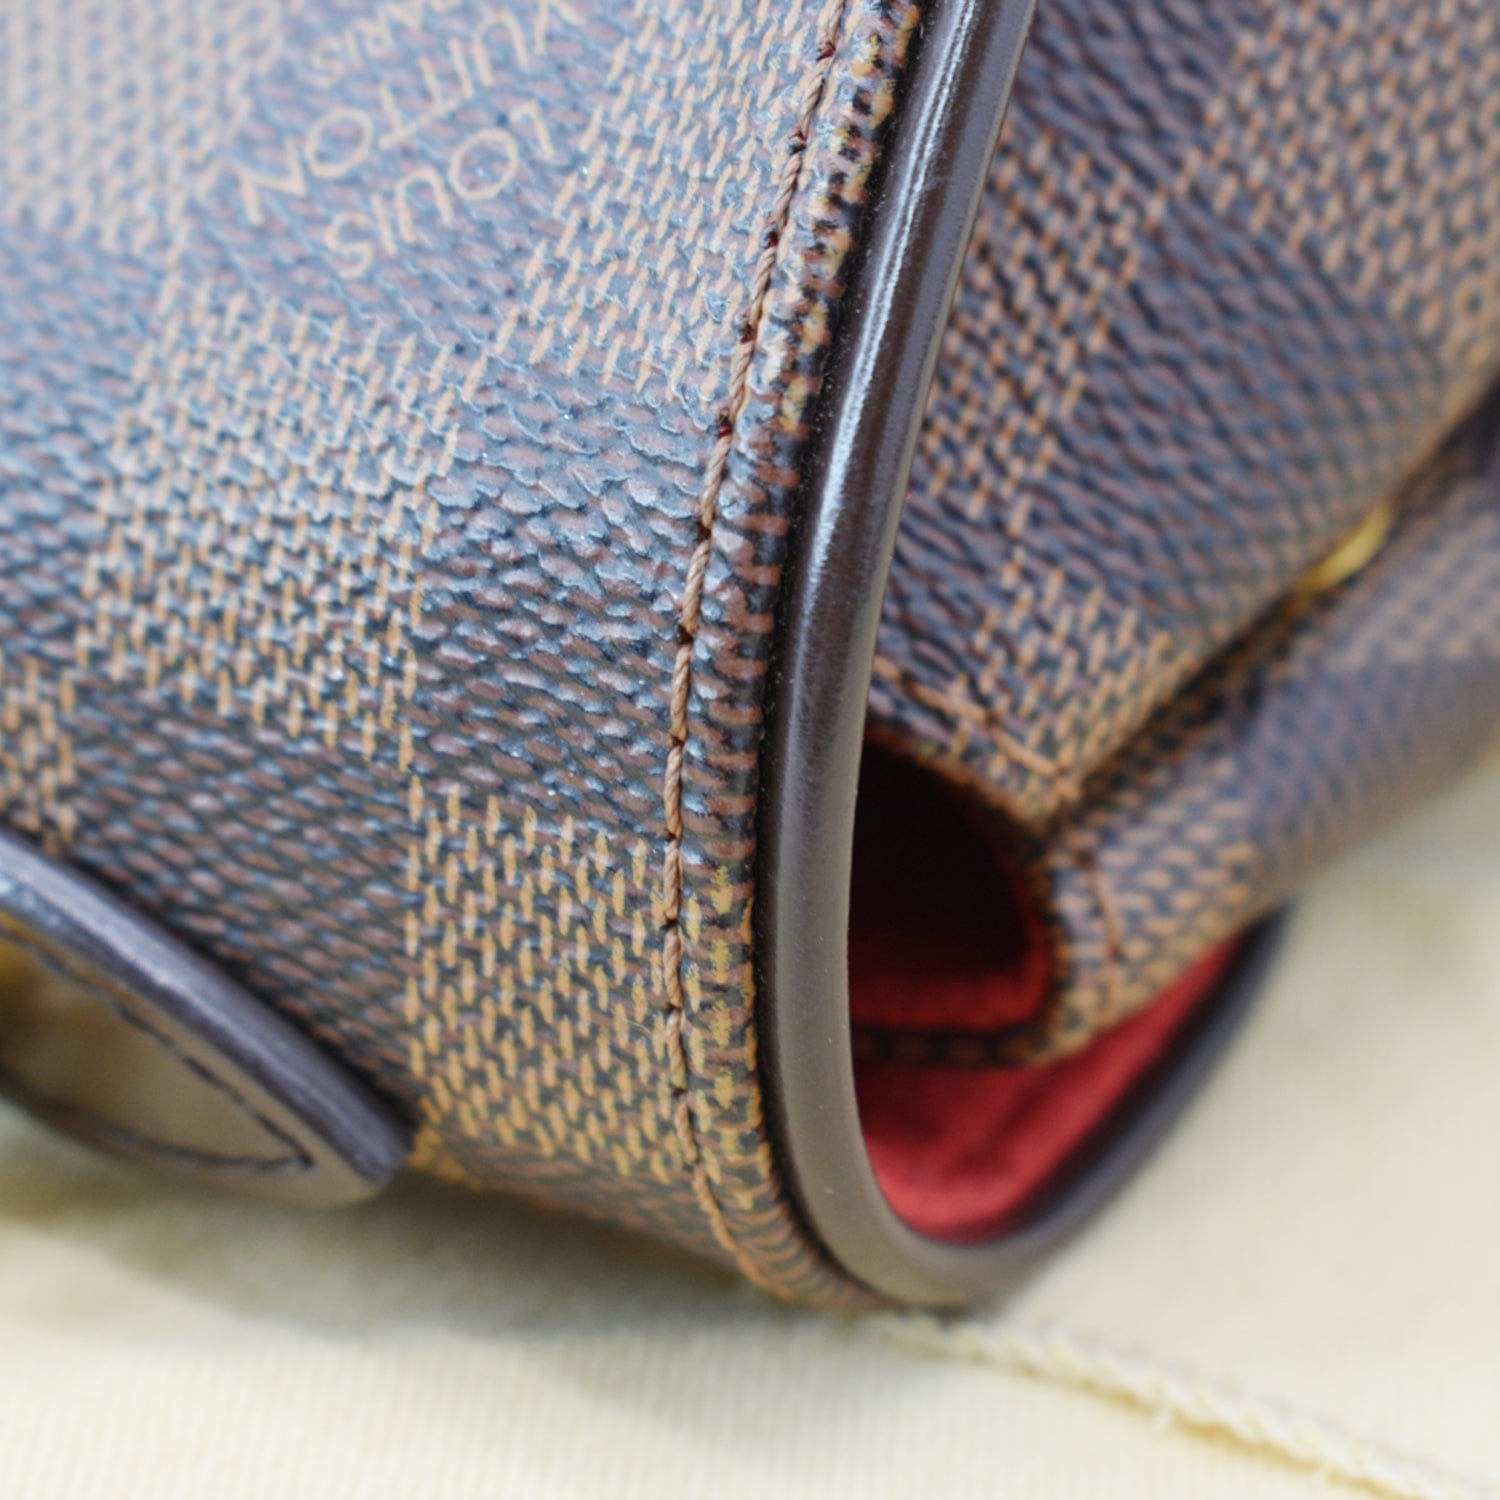 Bergamo leather handbag Louis Vuitton Brown in Leather - 29629684